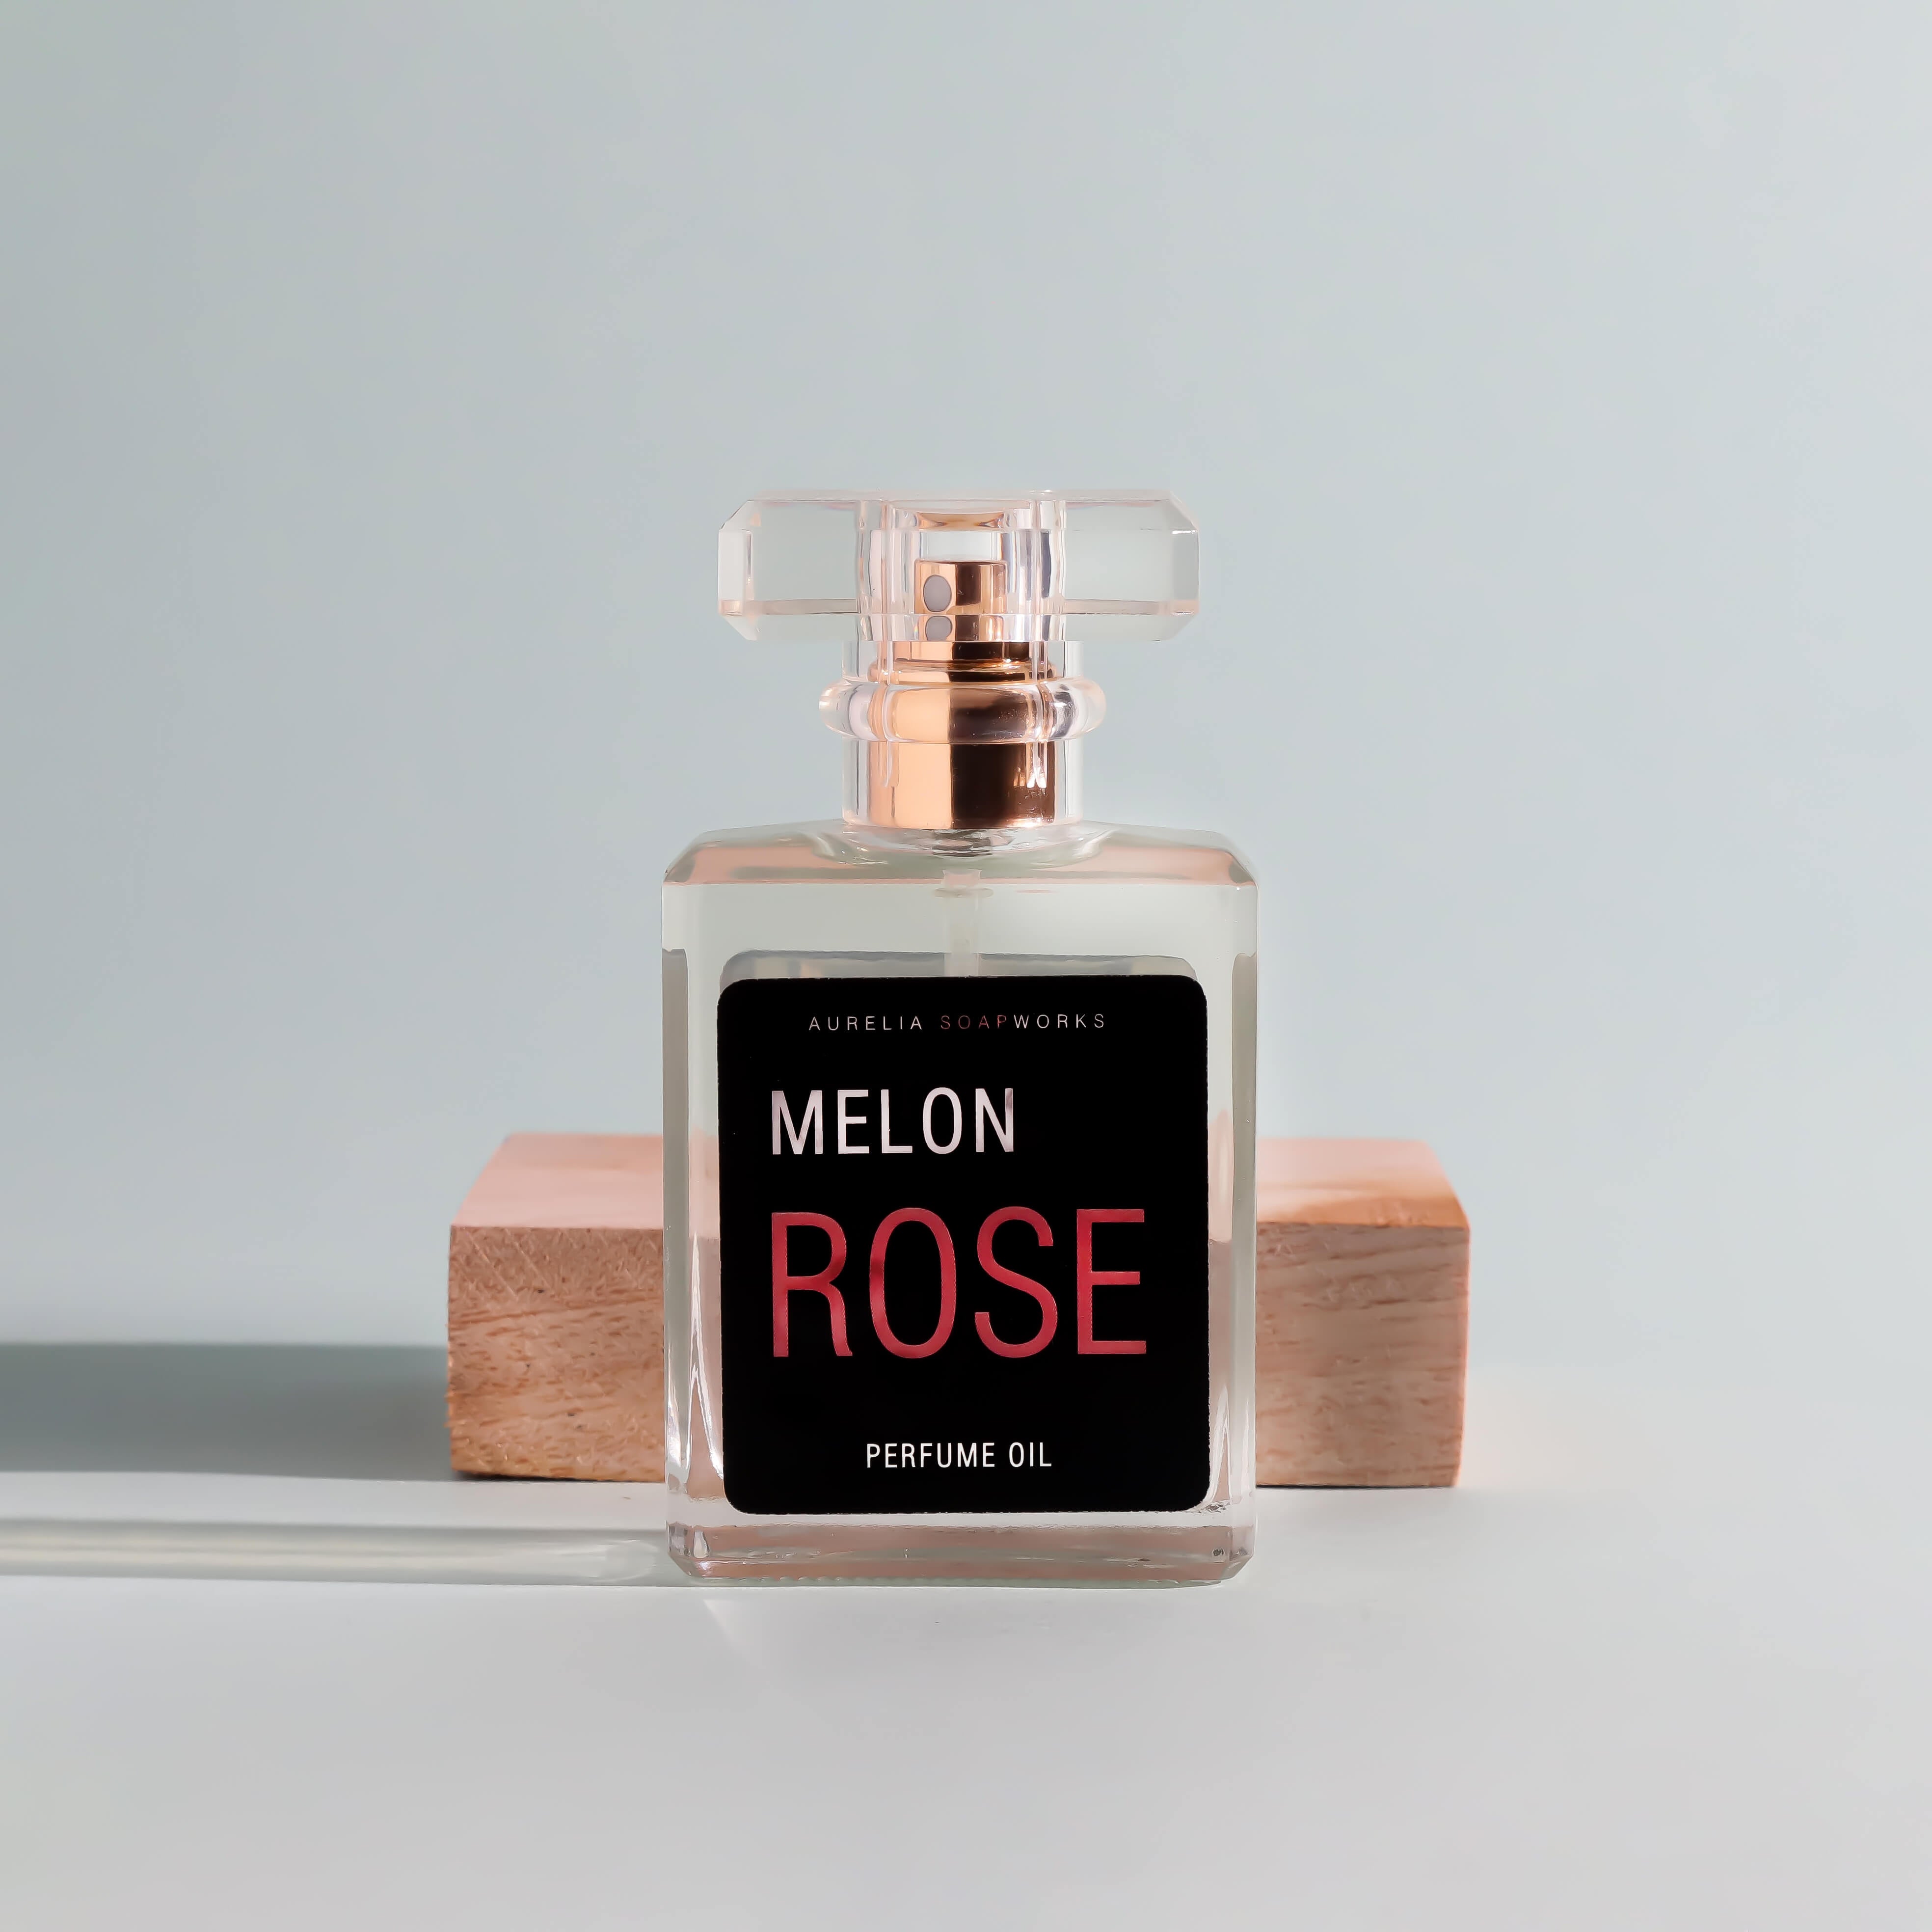 Melon rose perfume oil